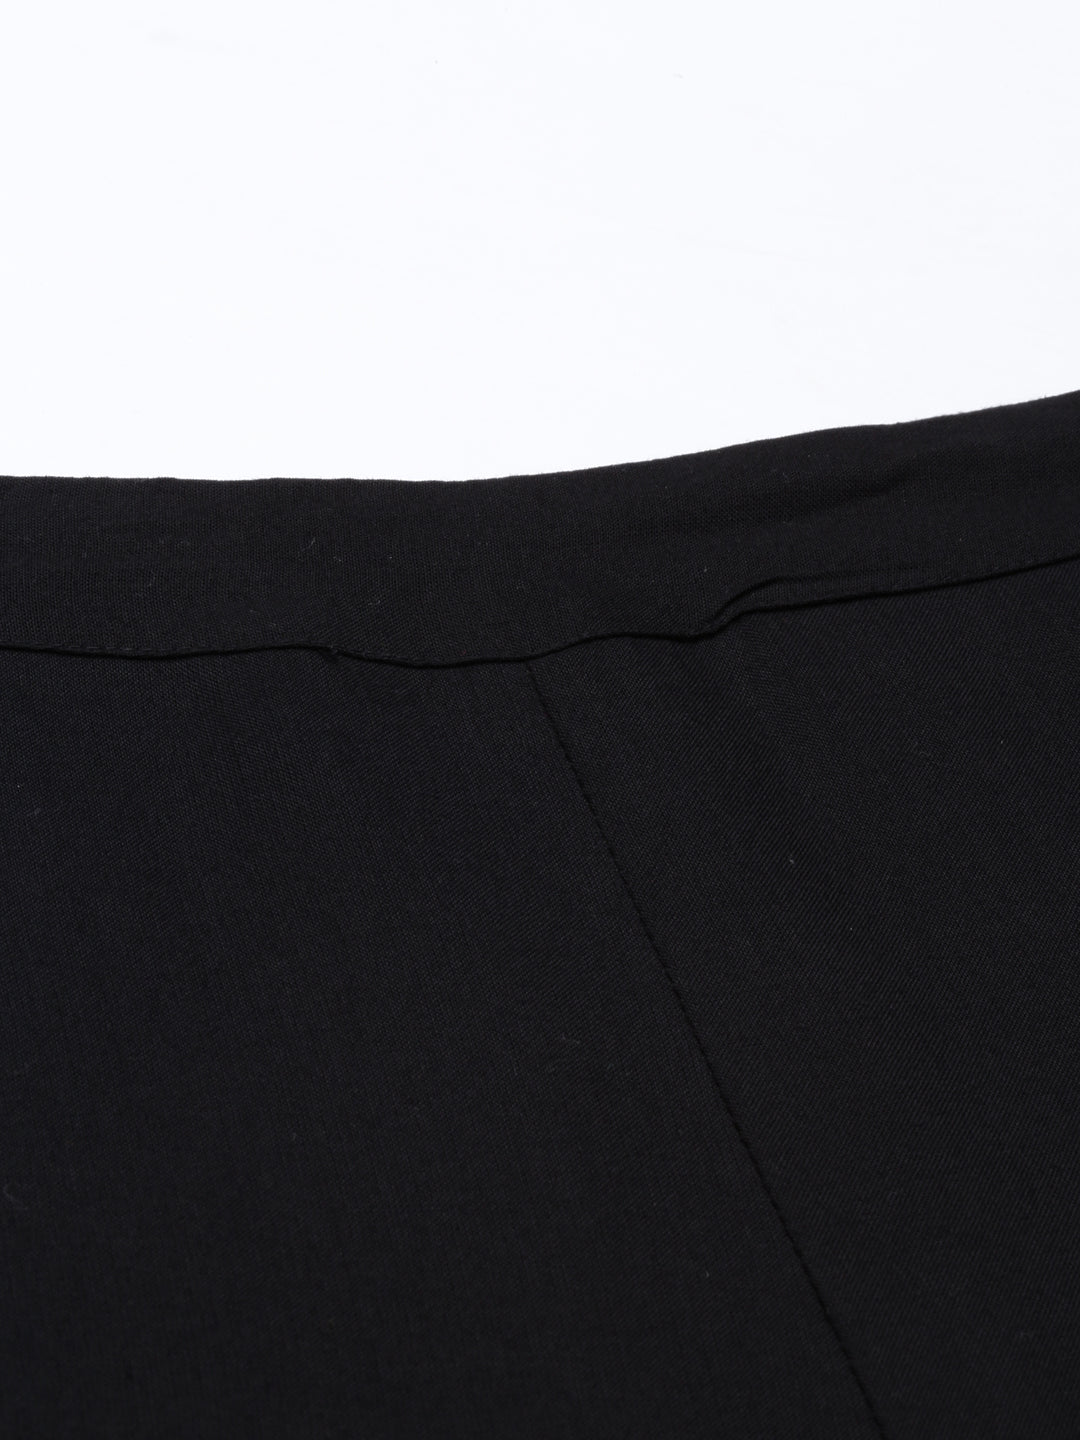 Neeru's Black Color Rayon Fabric Plazzo